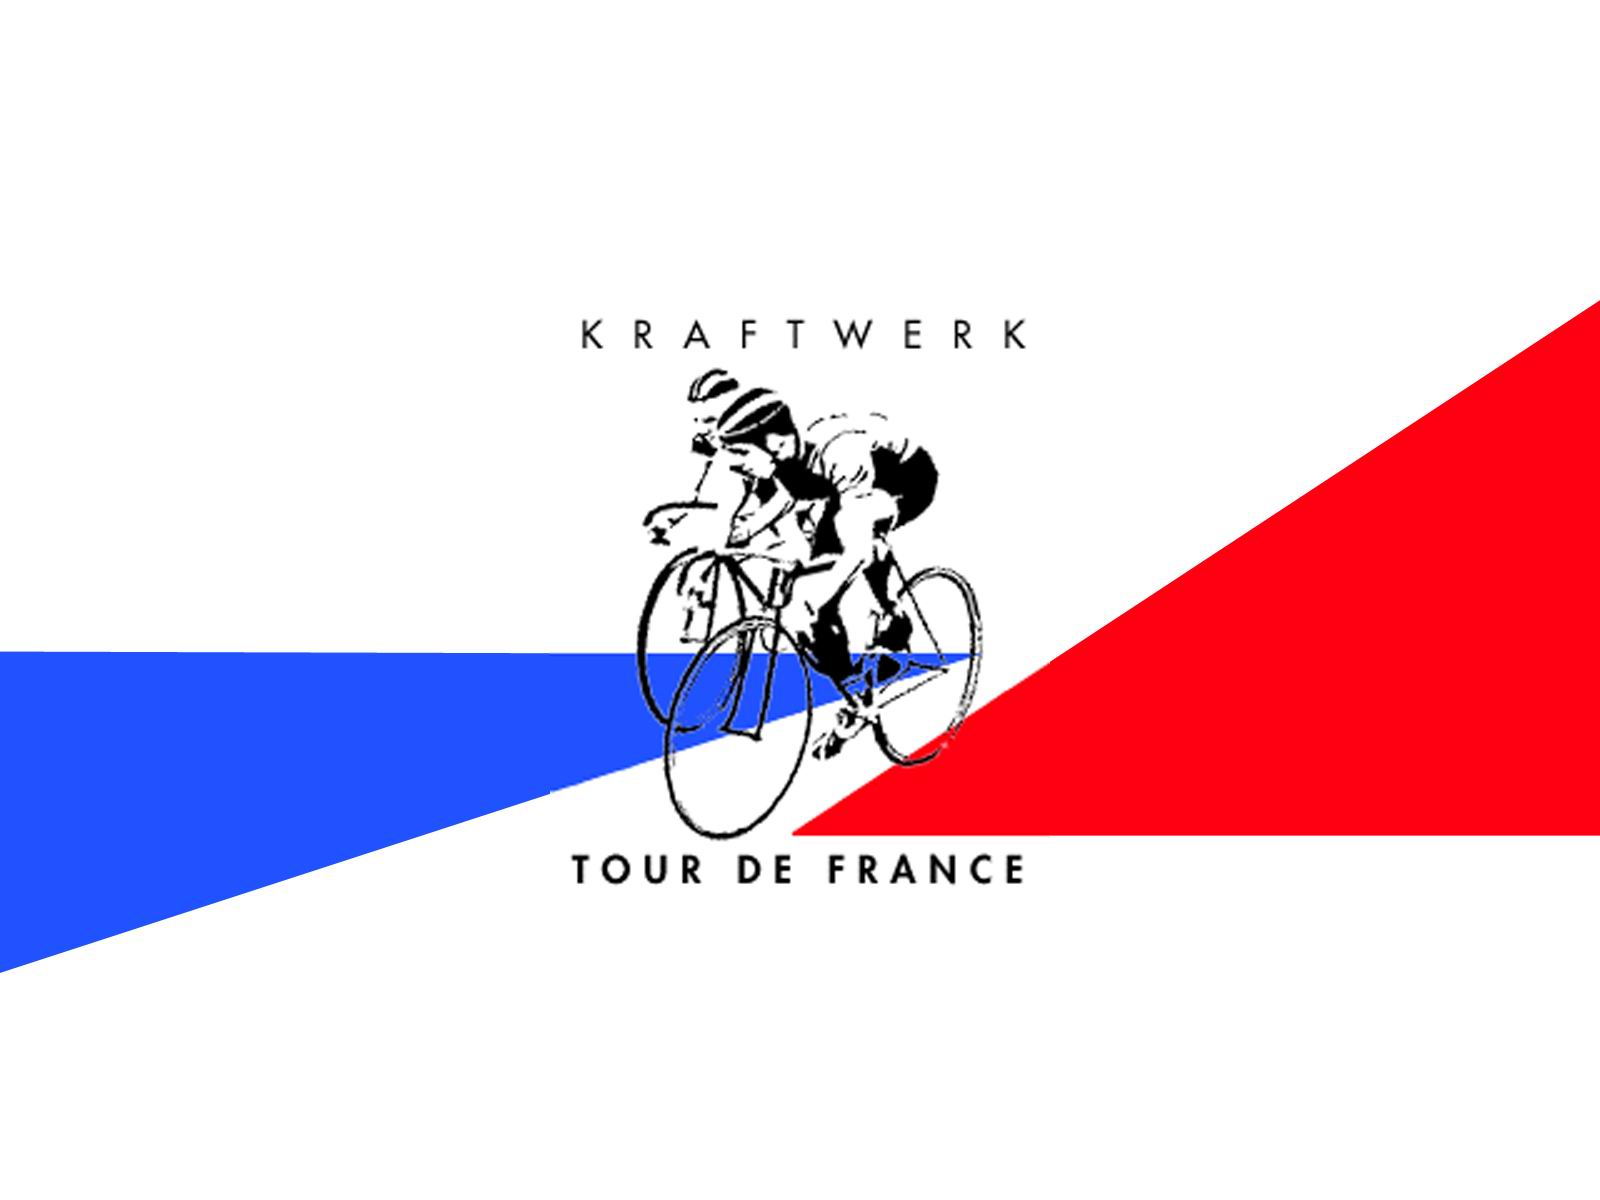 Kraftwerk Tour De France By Oliau